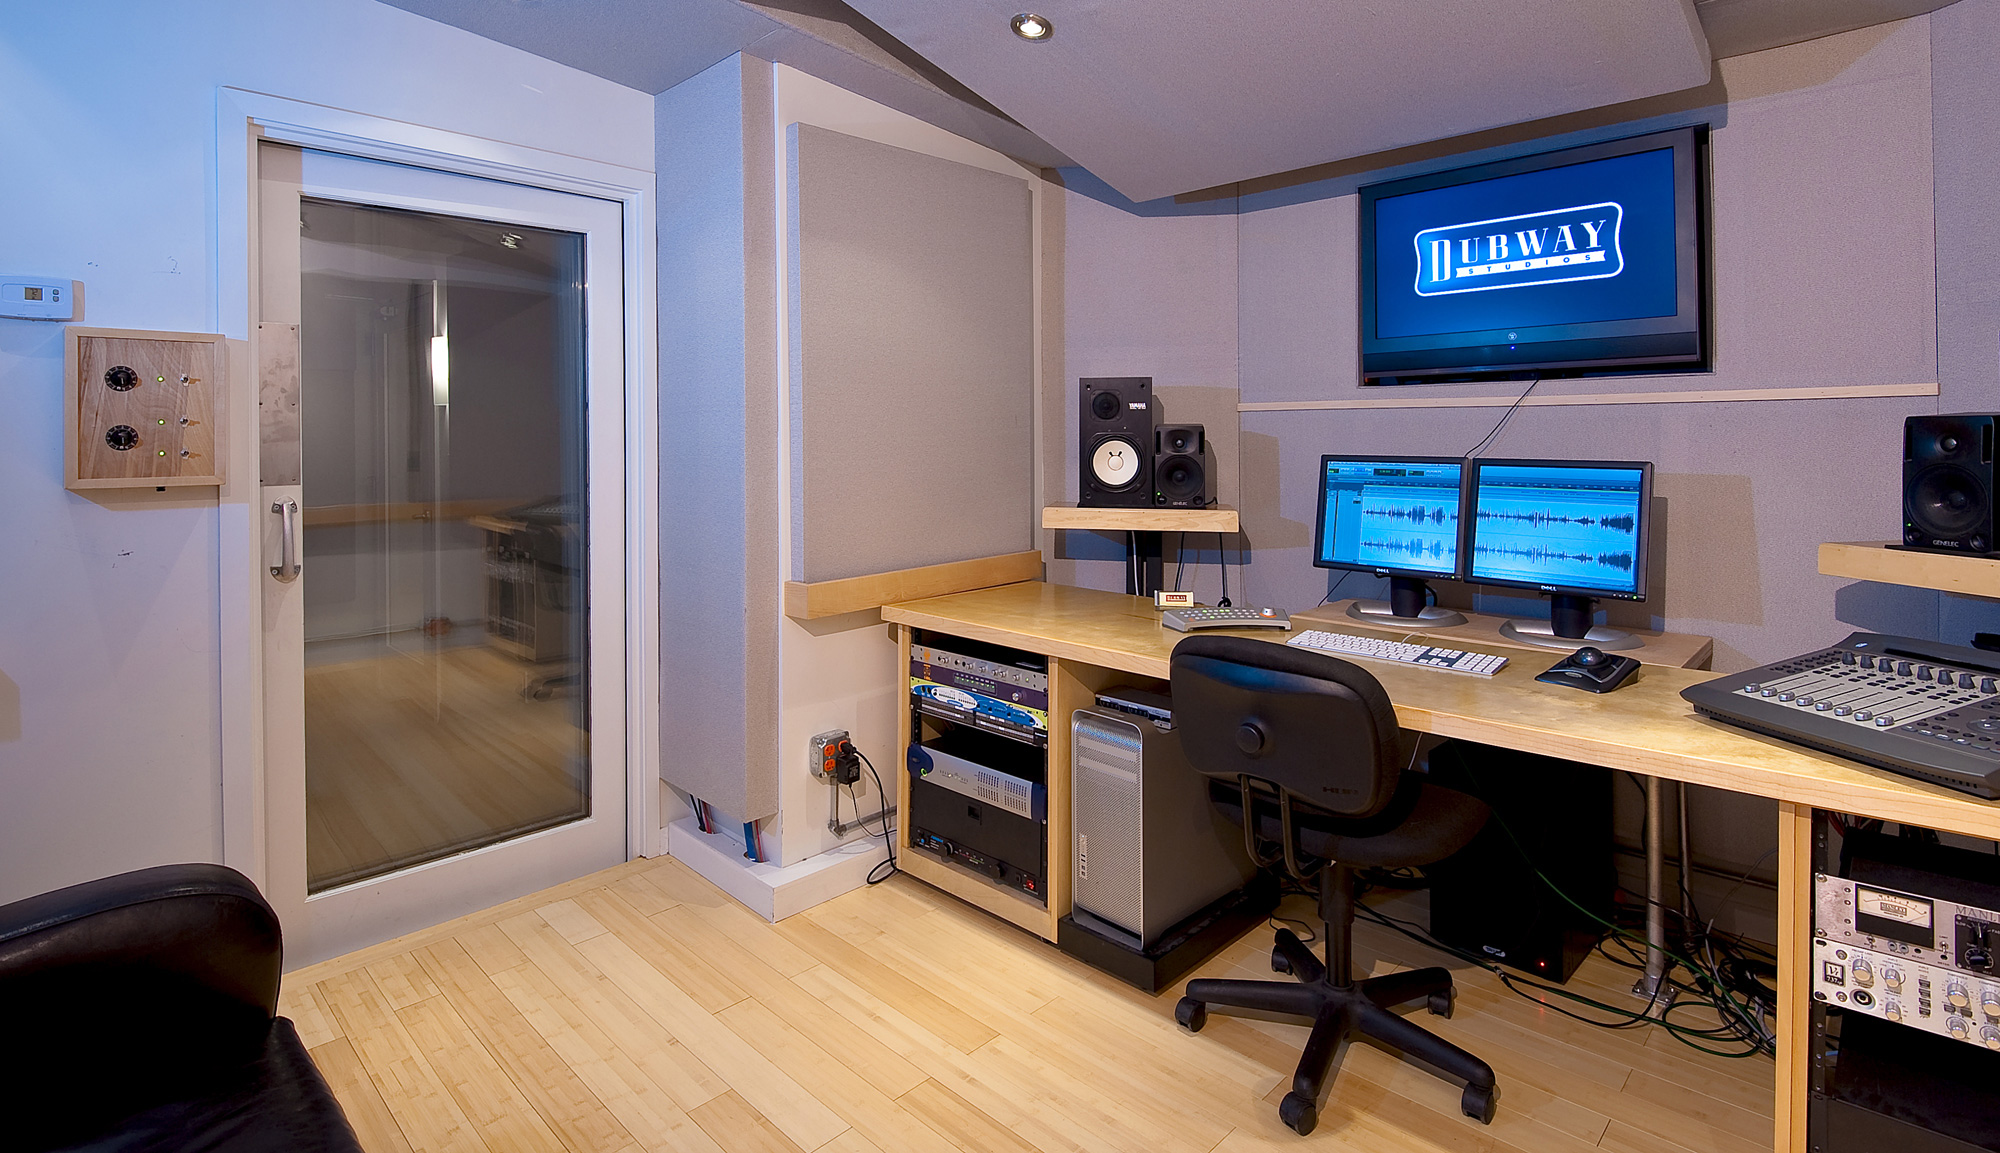   The Facility    Main Floor Studios &nbsp;&nbsp;  The Mezzanine Studio  